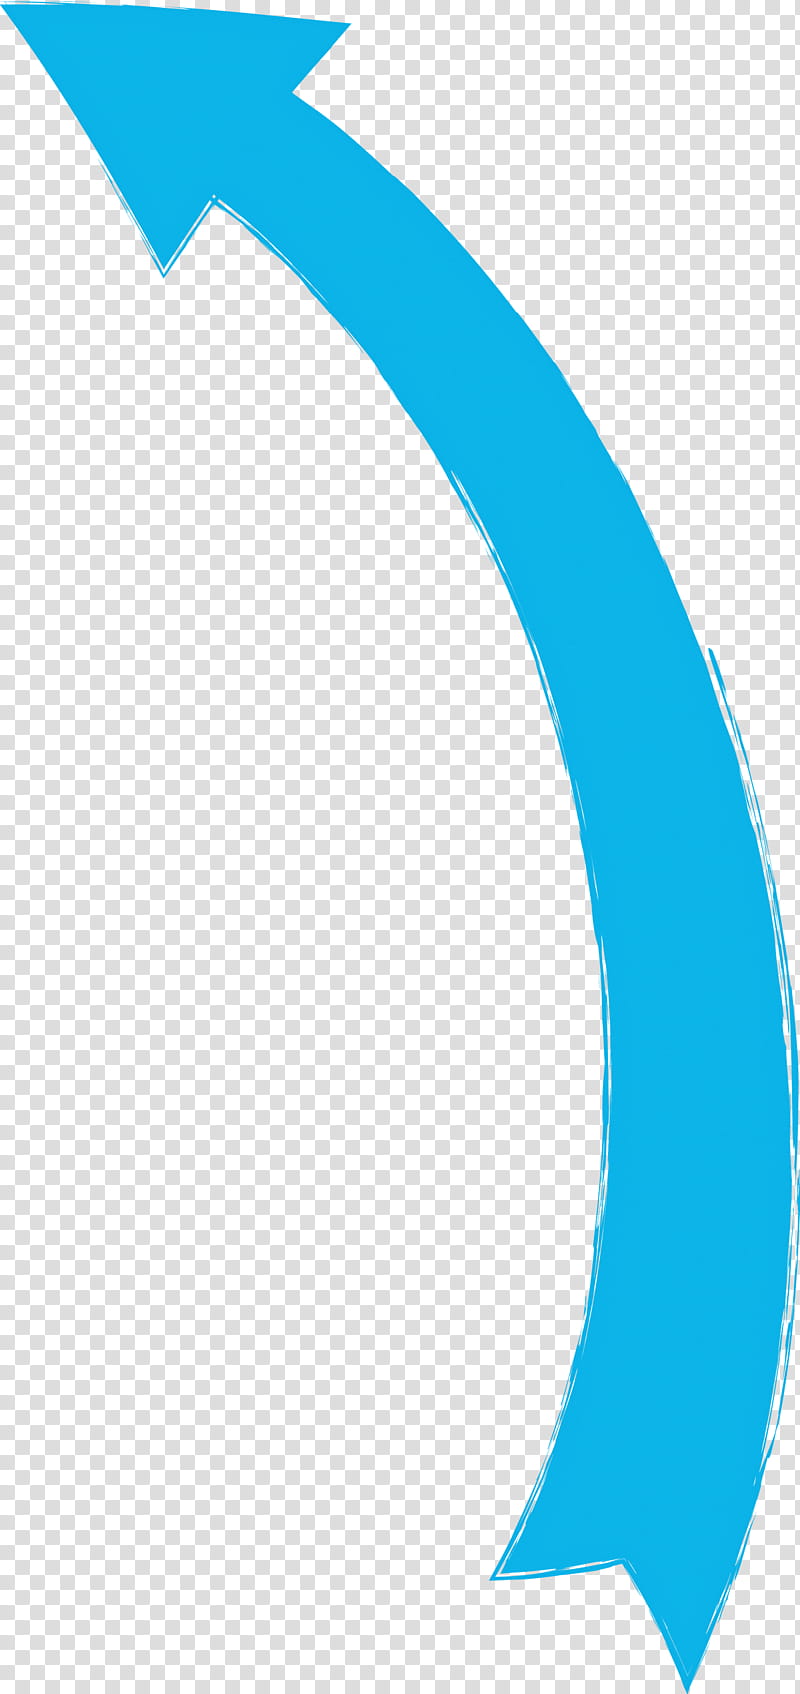 Rising Arrow, Blue, Aqua, Turquoise, Teal, Azure, Line, Circle transparent background PNG clipart